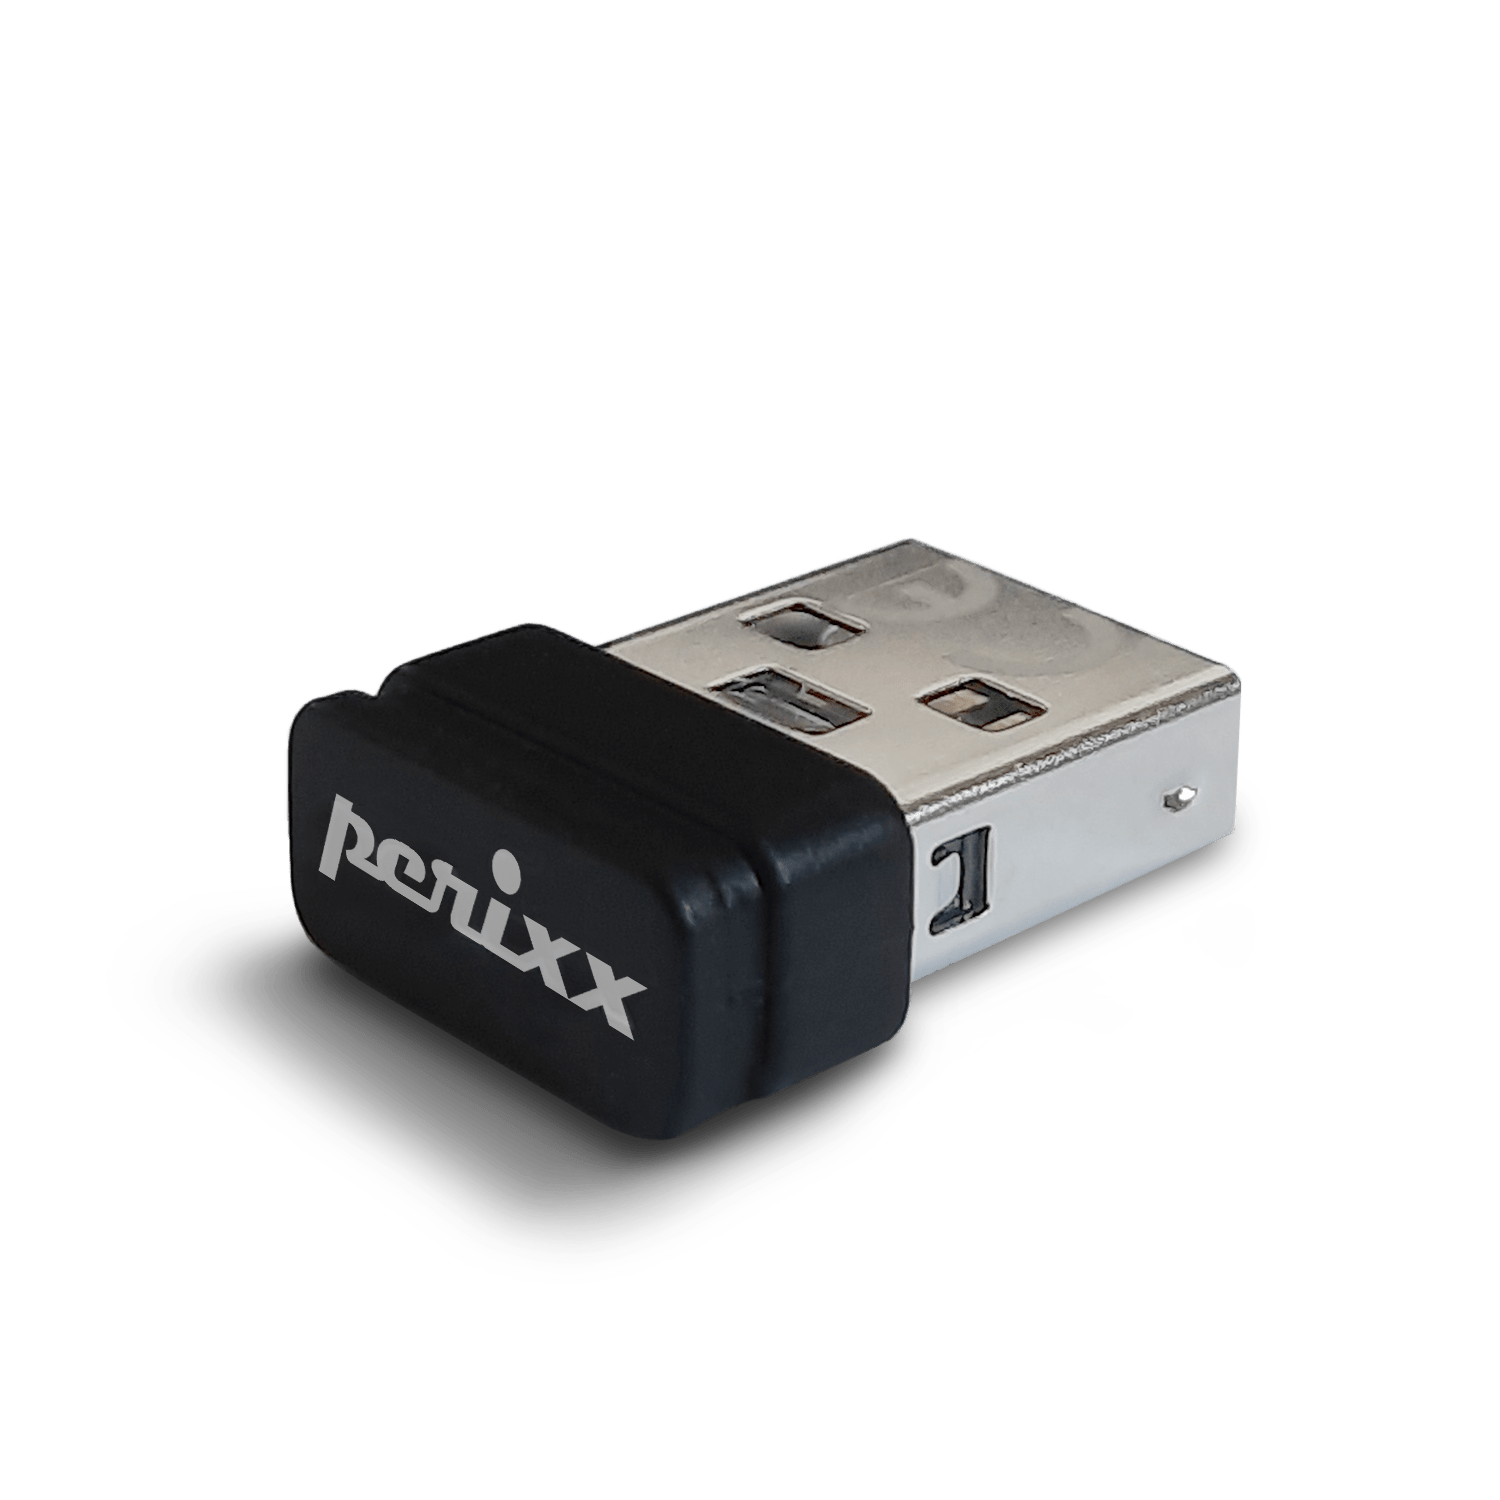 USB dongle receiver for PERIBOARD-612-Black - Perixx Europe